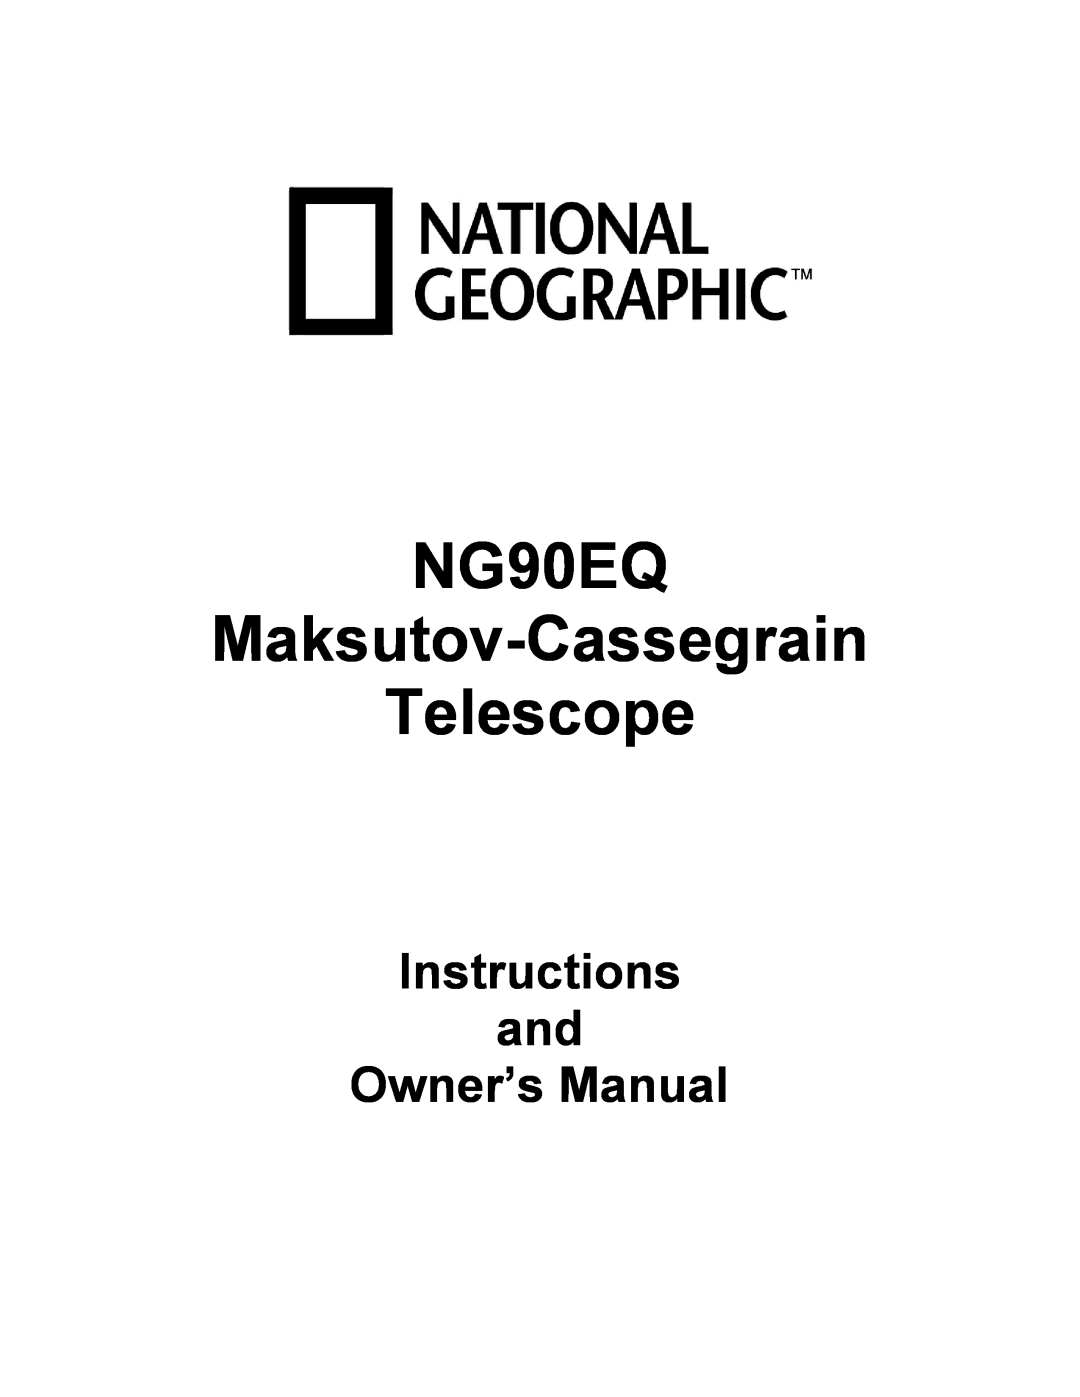 National Geographic owner manual NG90EQ Maksutov-Cassegrain Telescope 